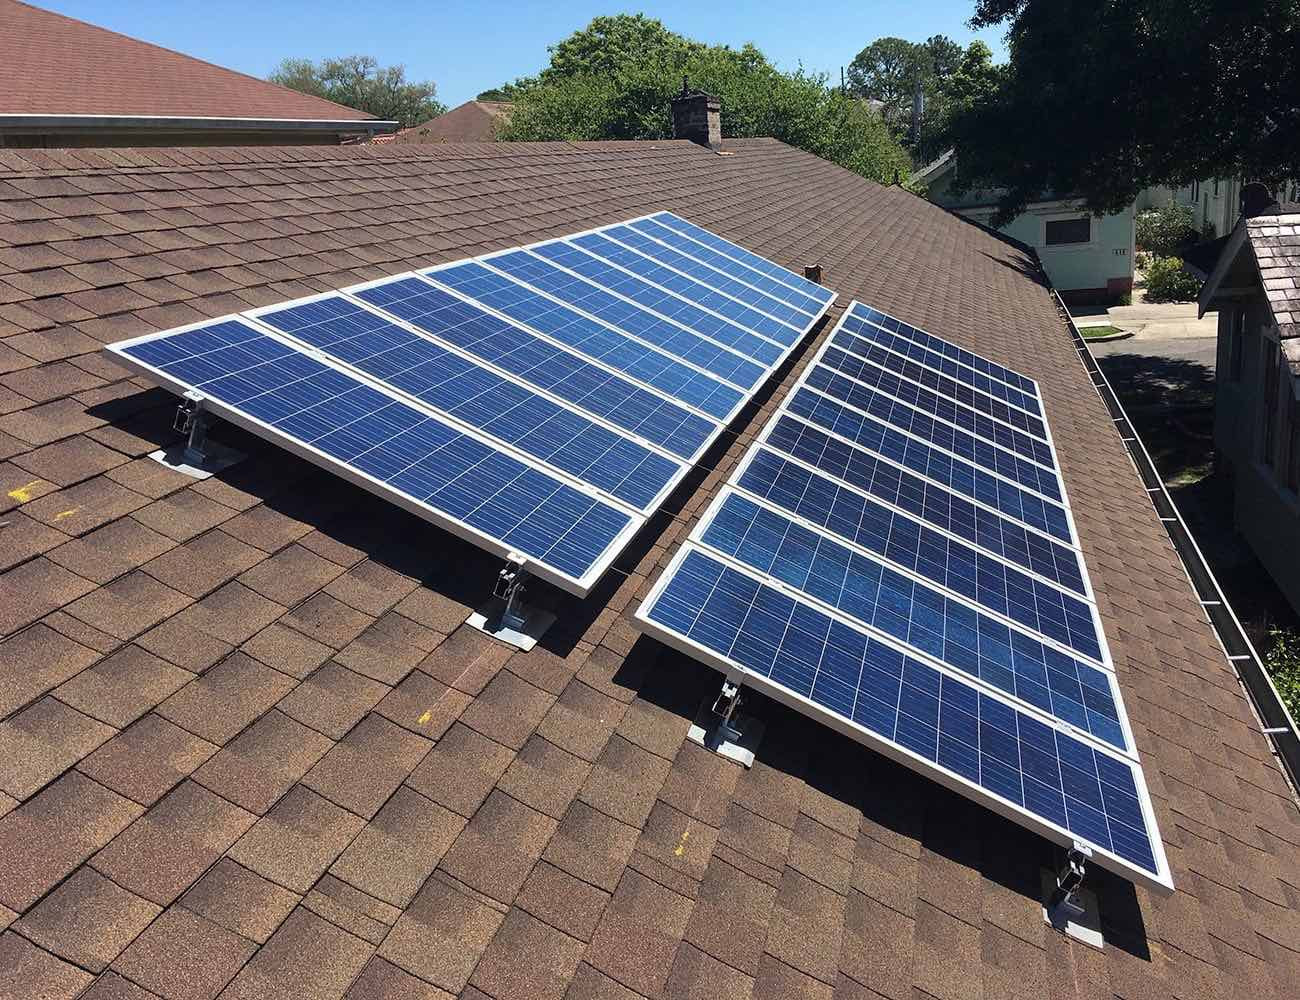 Best ideas about DIY Solar Panels Kit
. Save or Pin Legion Solar 2 DIY Solar Panel Kits Gad Flow Now.